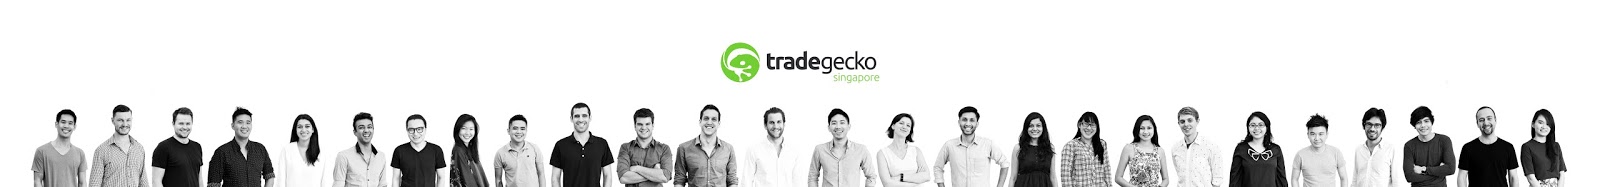 tradegecko_team-1